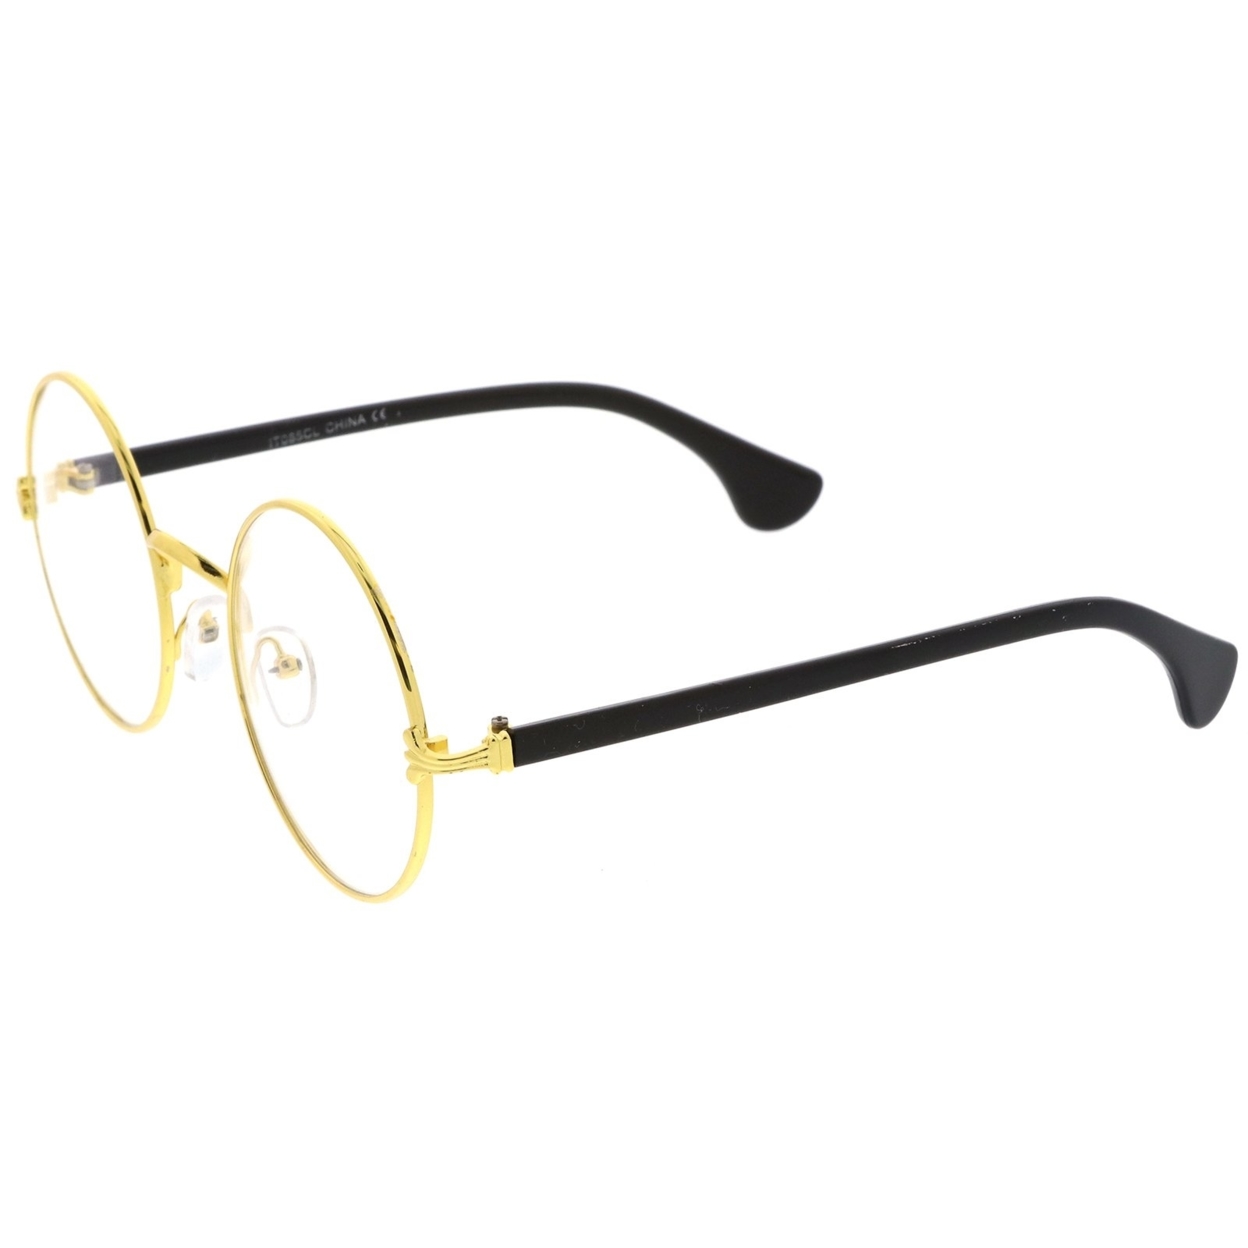 Classic Slim Metal Frame Clear Lens Round Eyeglasses 53mm - Gold-Tortoise / Clear